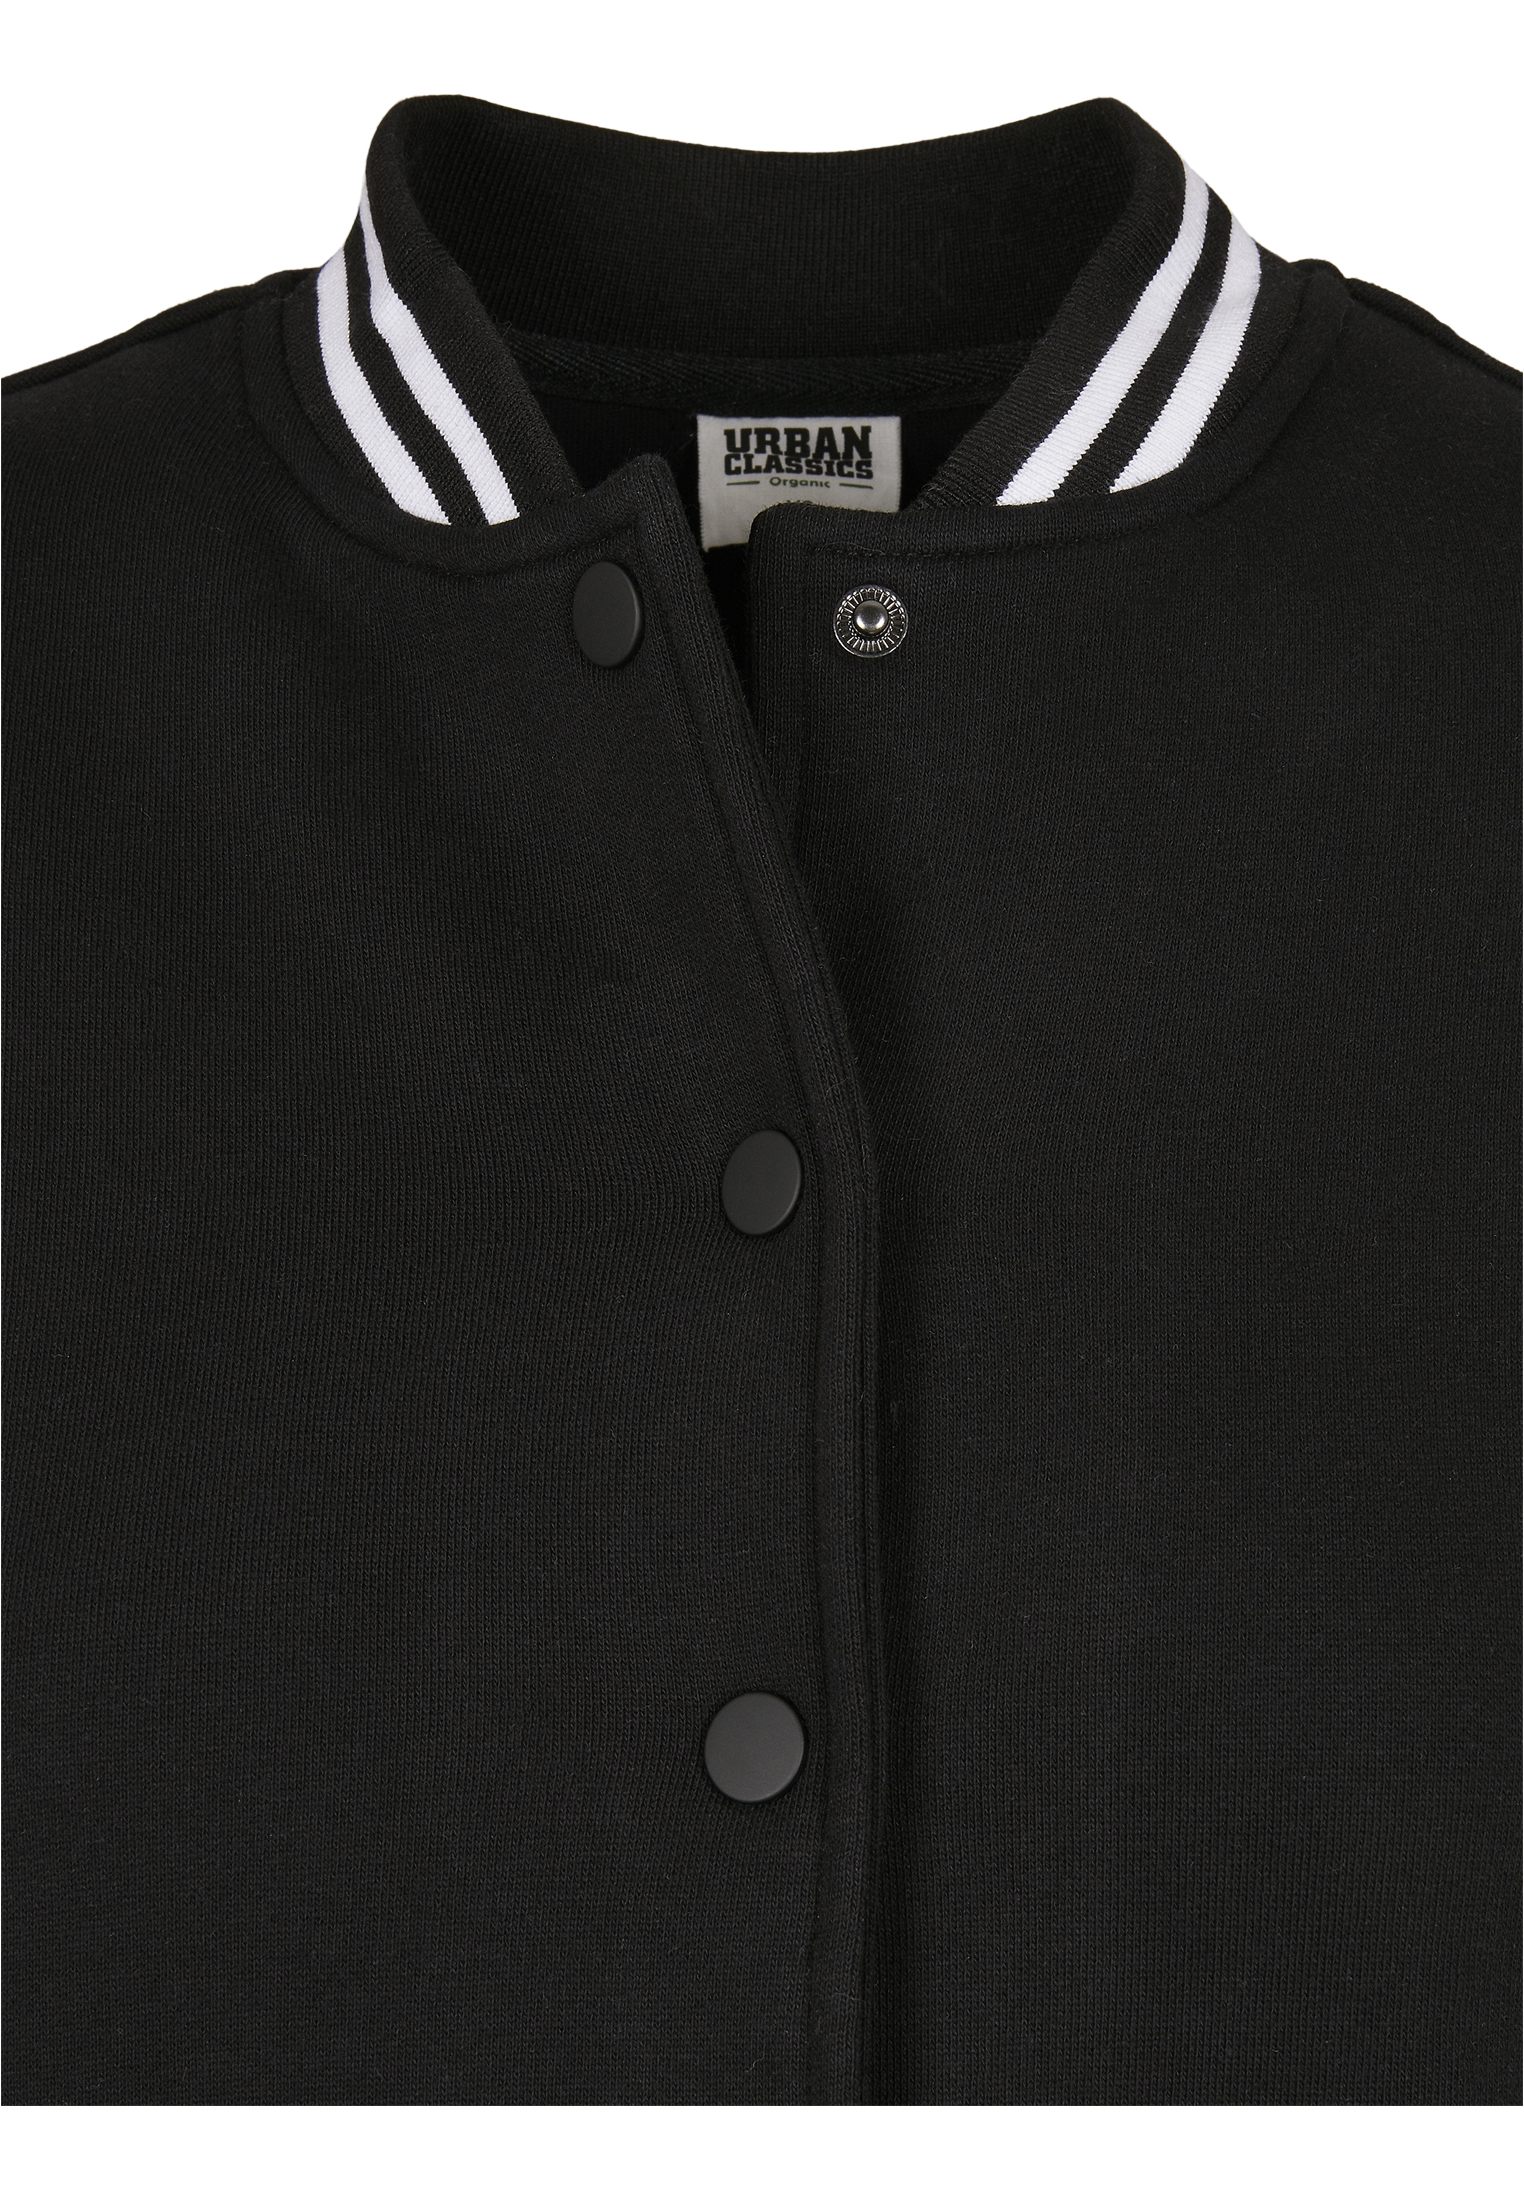 Nachhaltig Ladies Organic Inset College Sweat Jacket in Farbe black/white